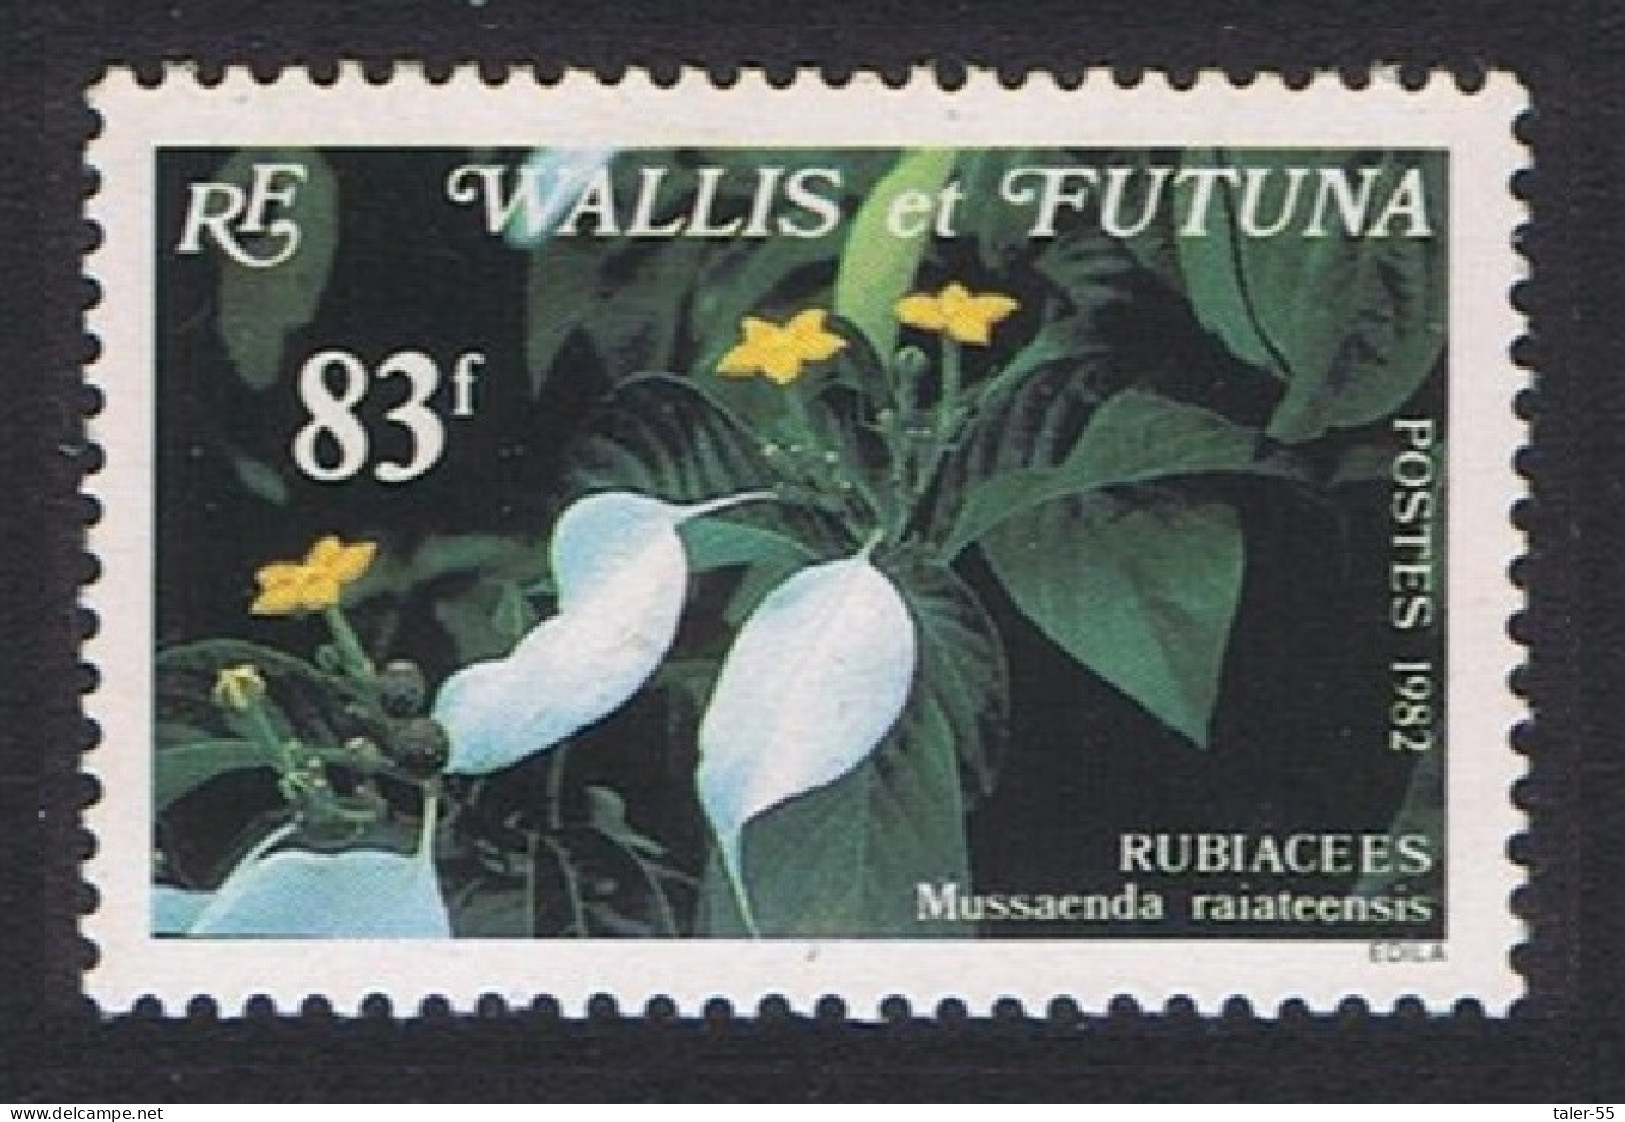 Wallis And Futuna Orchids Mussaenda Raiateensis 83f 1982 MNH SG#399 Sc#286 - Unused Stamps